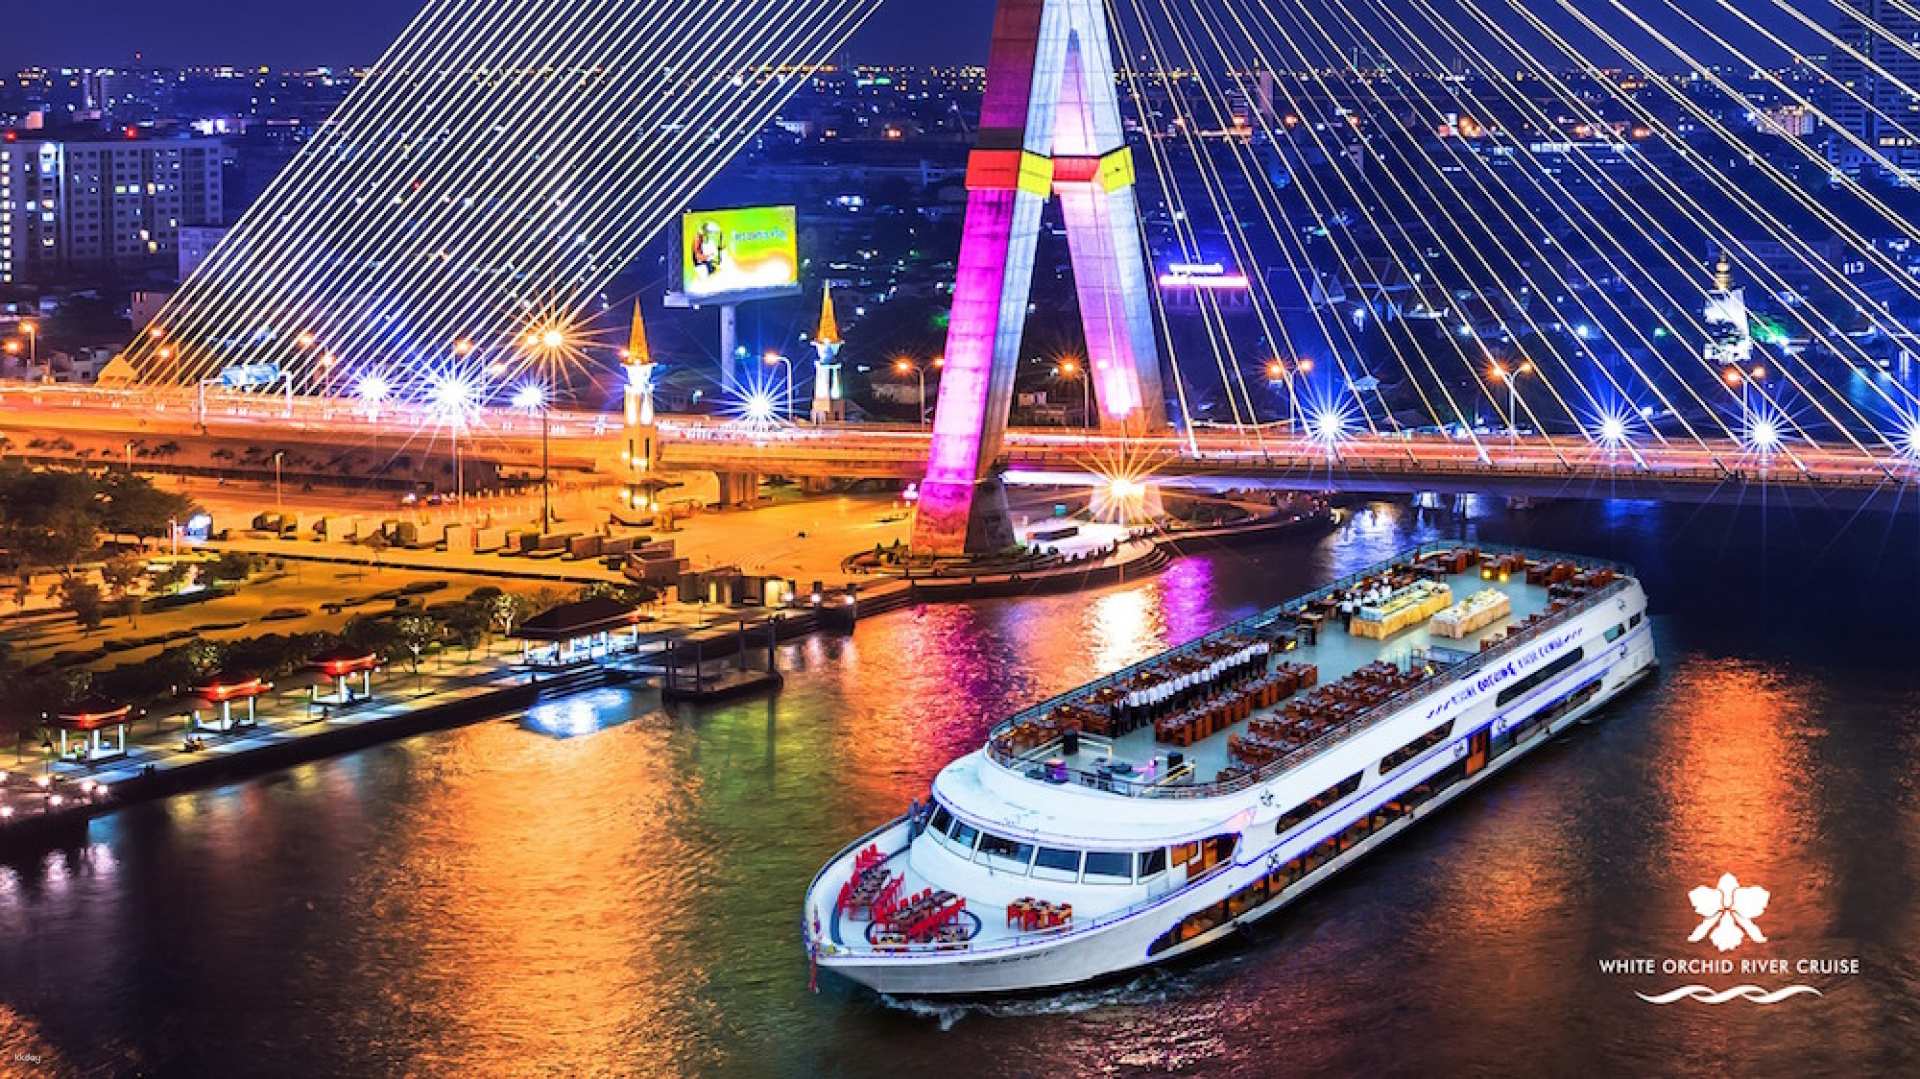 泰國-曼谷湄南河白蘭花河號遊船體驗 White Orchid River Cruise